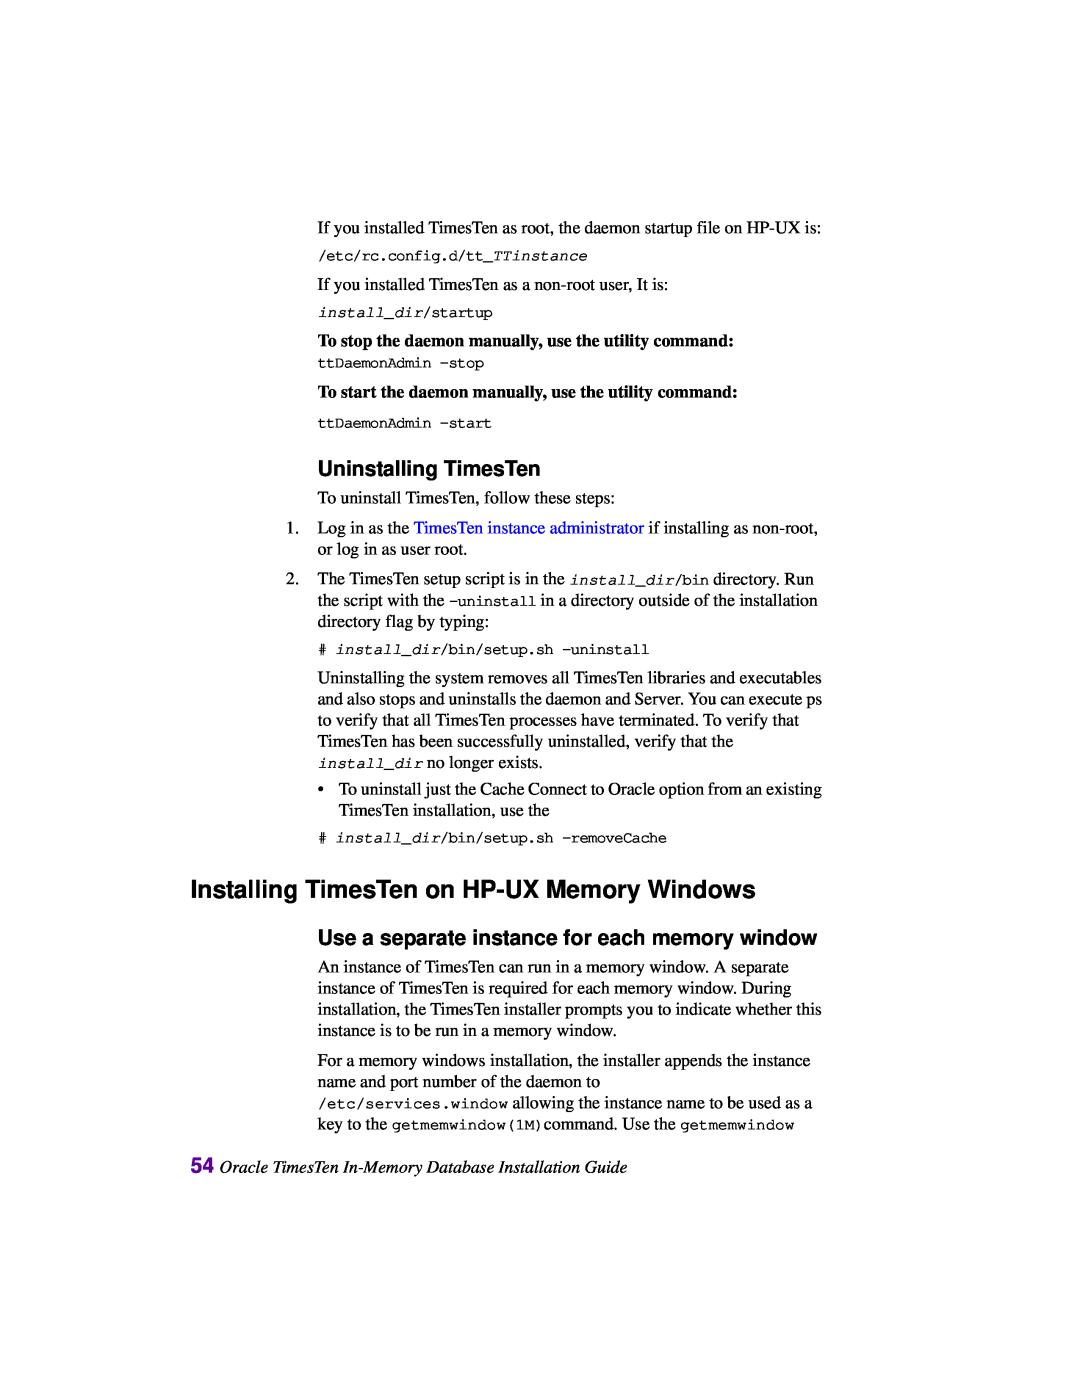 Oracle Audio Technologies B31679-01 manual Installing TimesTen on HP-UX Memory Windows, Uninstalling TimesTen 